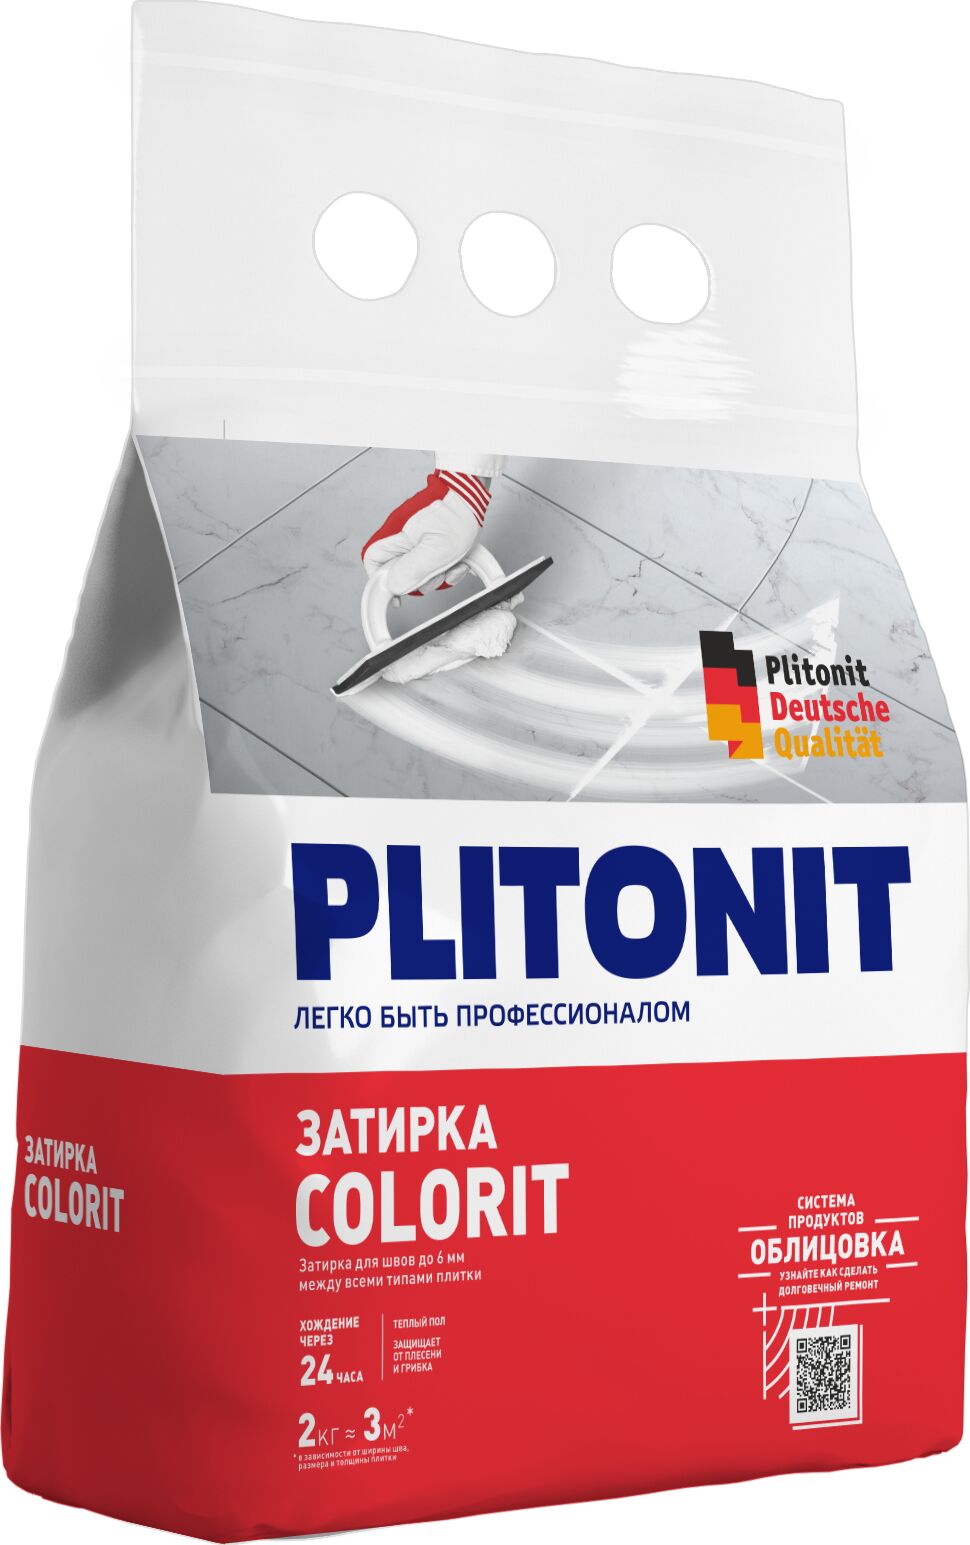 PLITONIT Colorit затирка между всеми типами плитки (1,5-6 мм) МОКРЫЙ АСФАЛЬТ -2 , PLITONIT Colorit затирка между всеми типами плитки (1,5-6 мм) МОКРЫЙ АСФАЛЬТ -2 